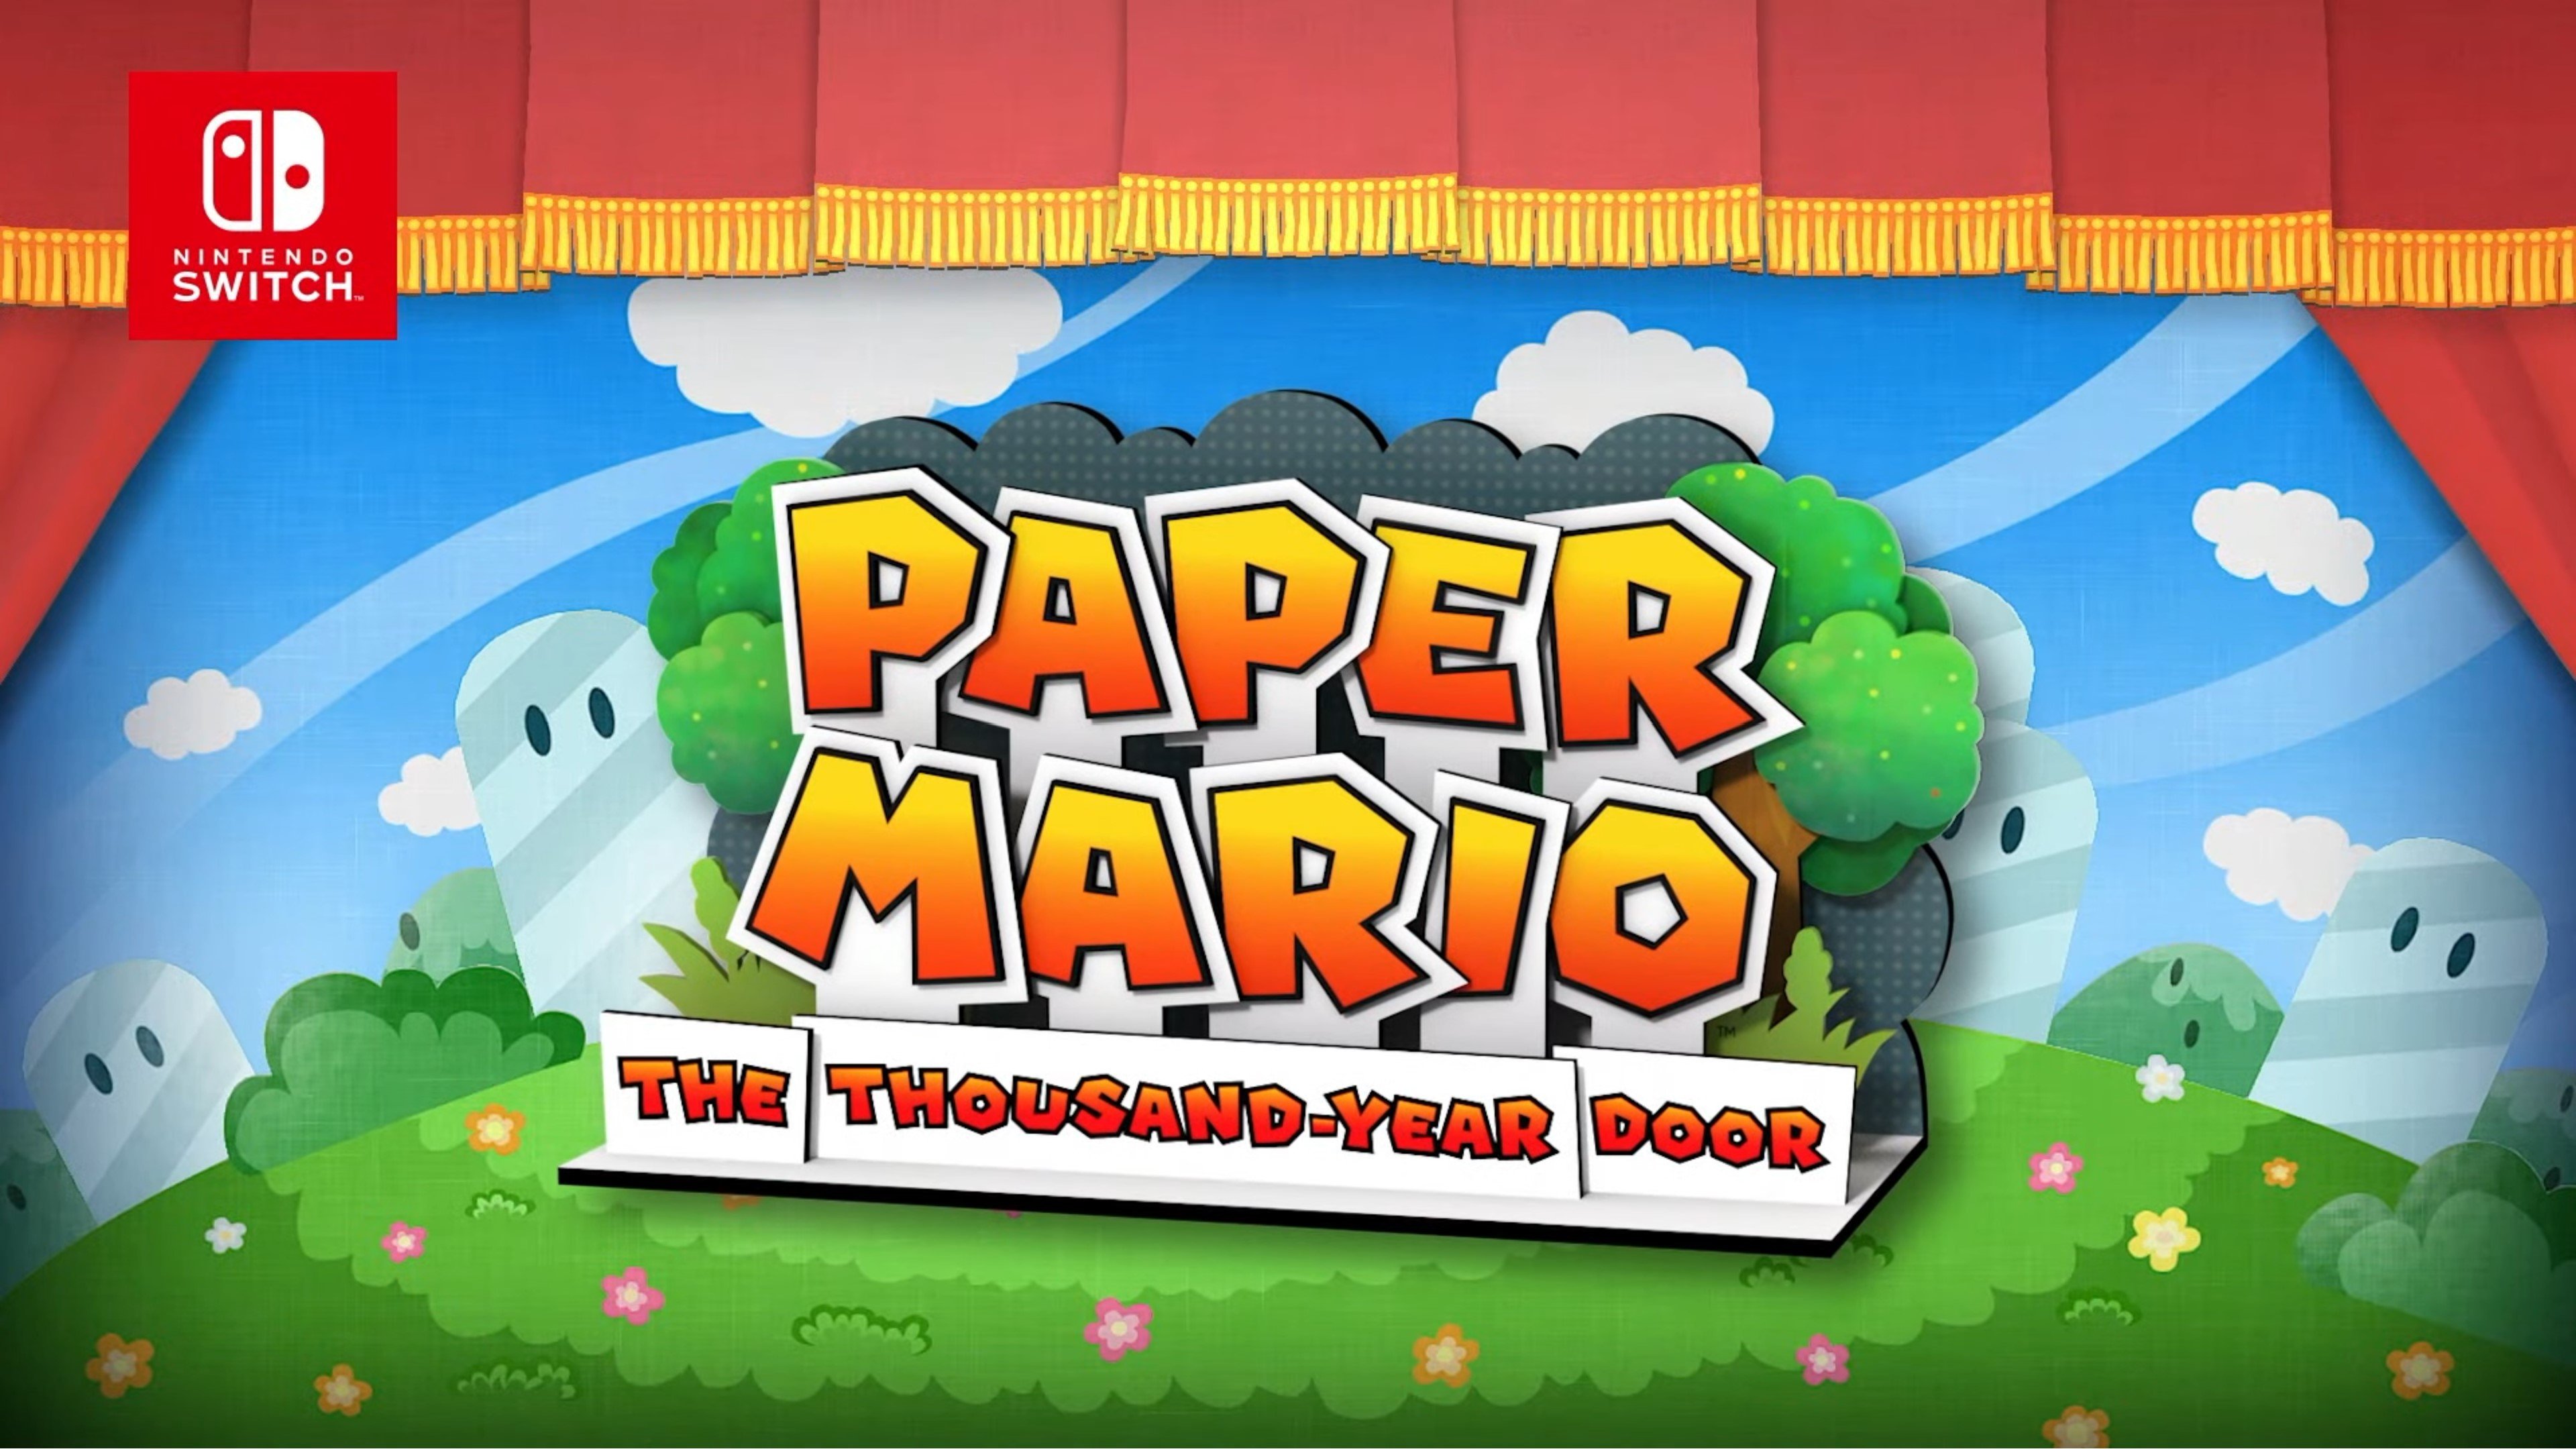 Super Paper Mario (Renewed)